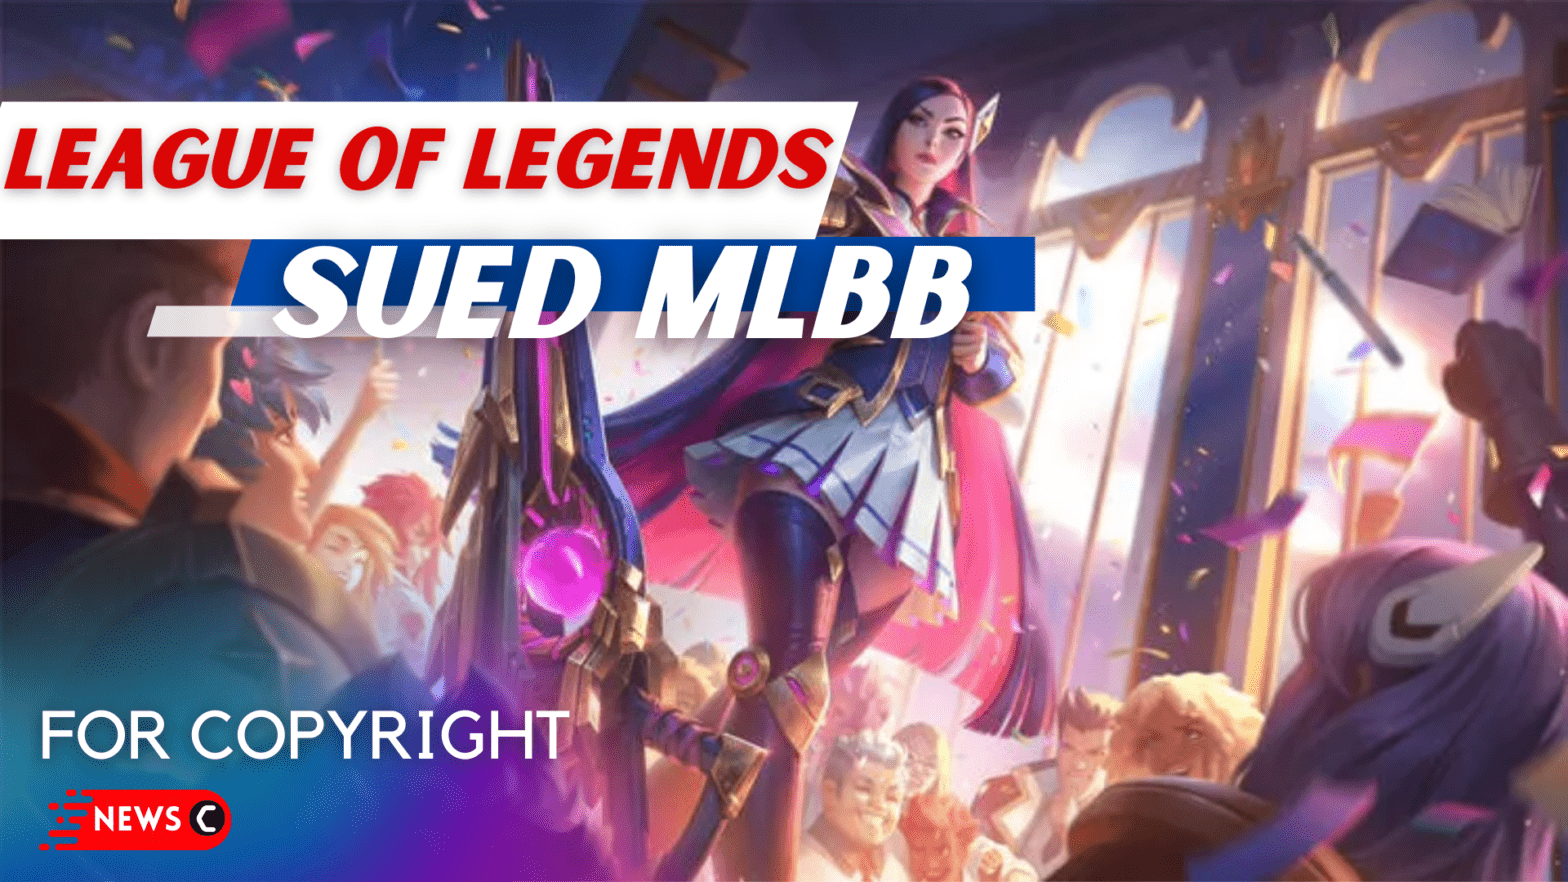 League of Legends Developer Suing Mobile Legends for Copyright